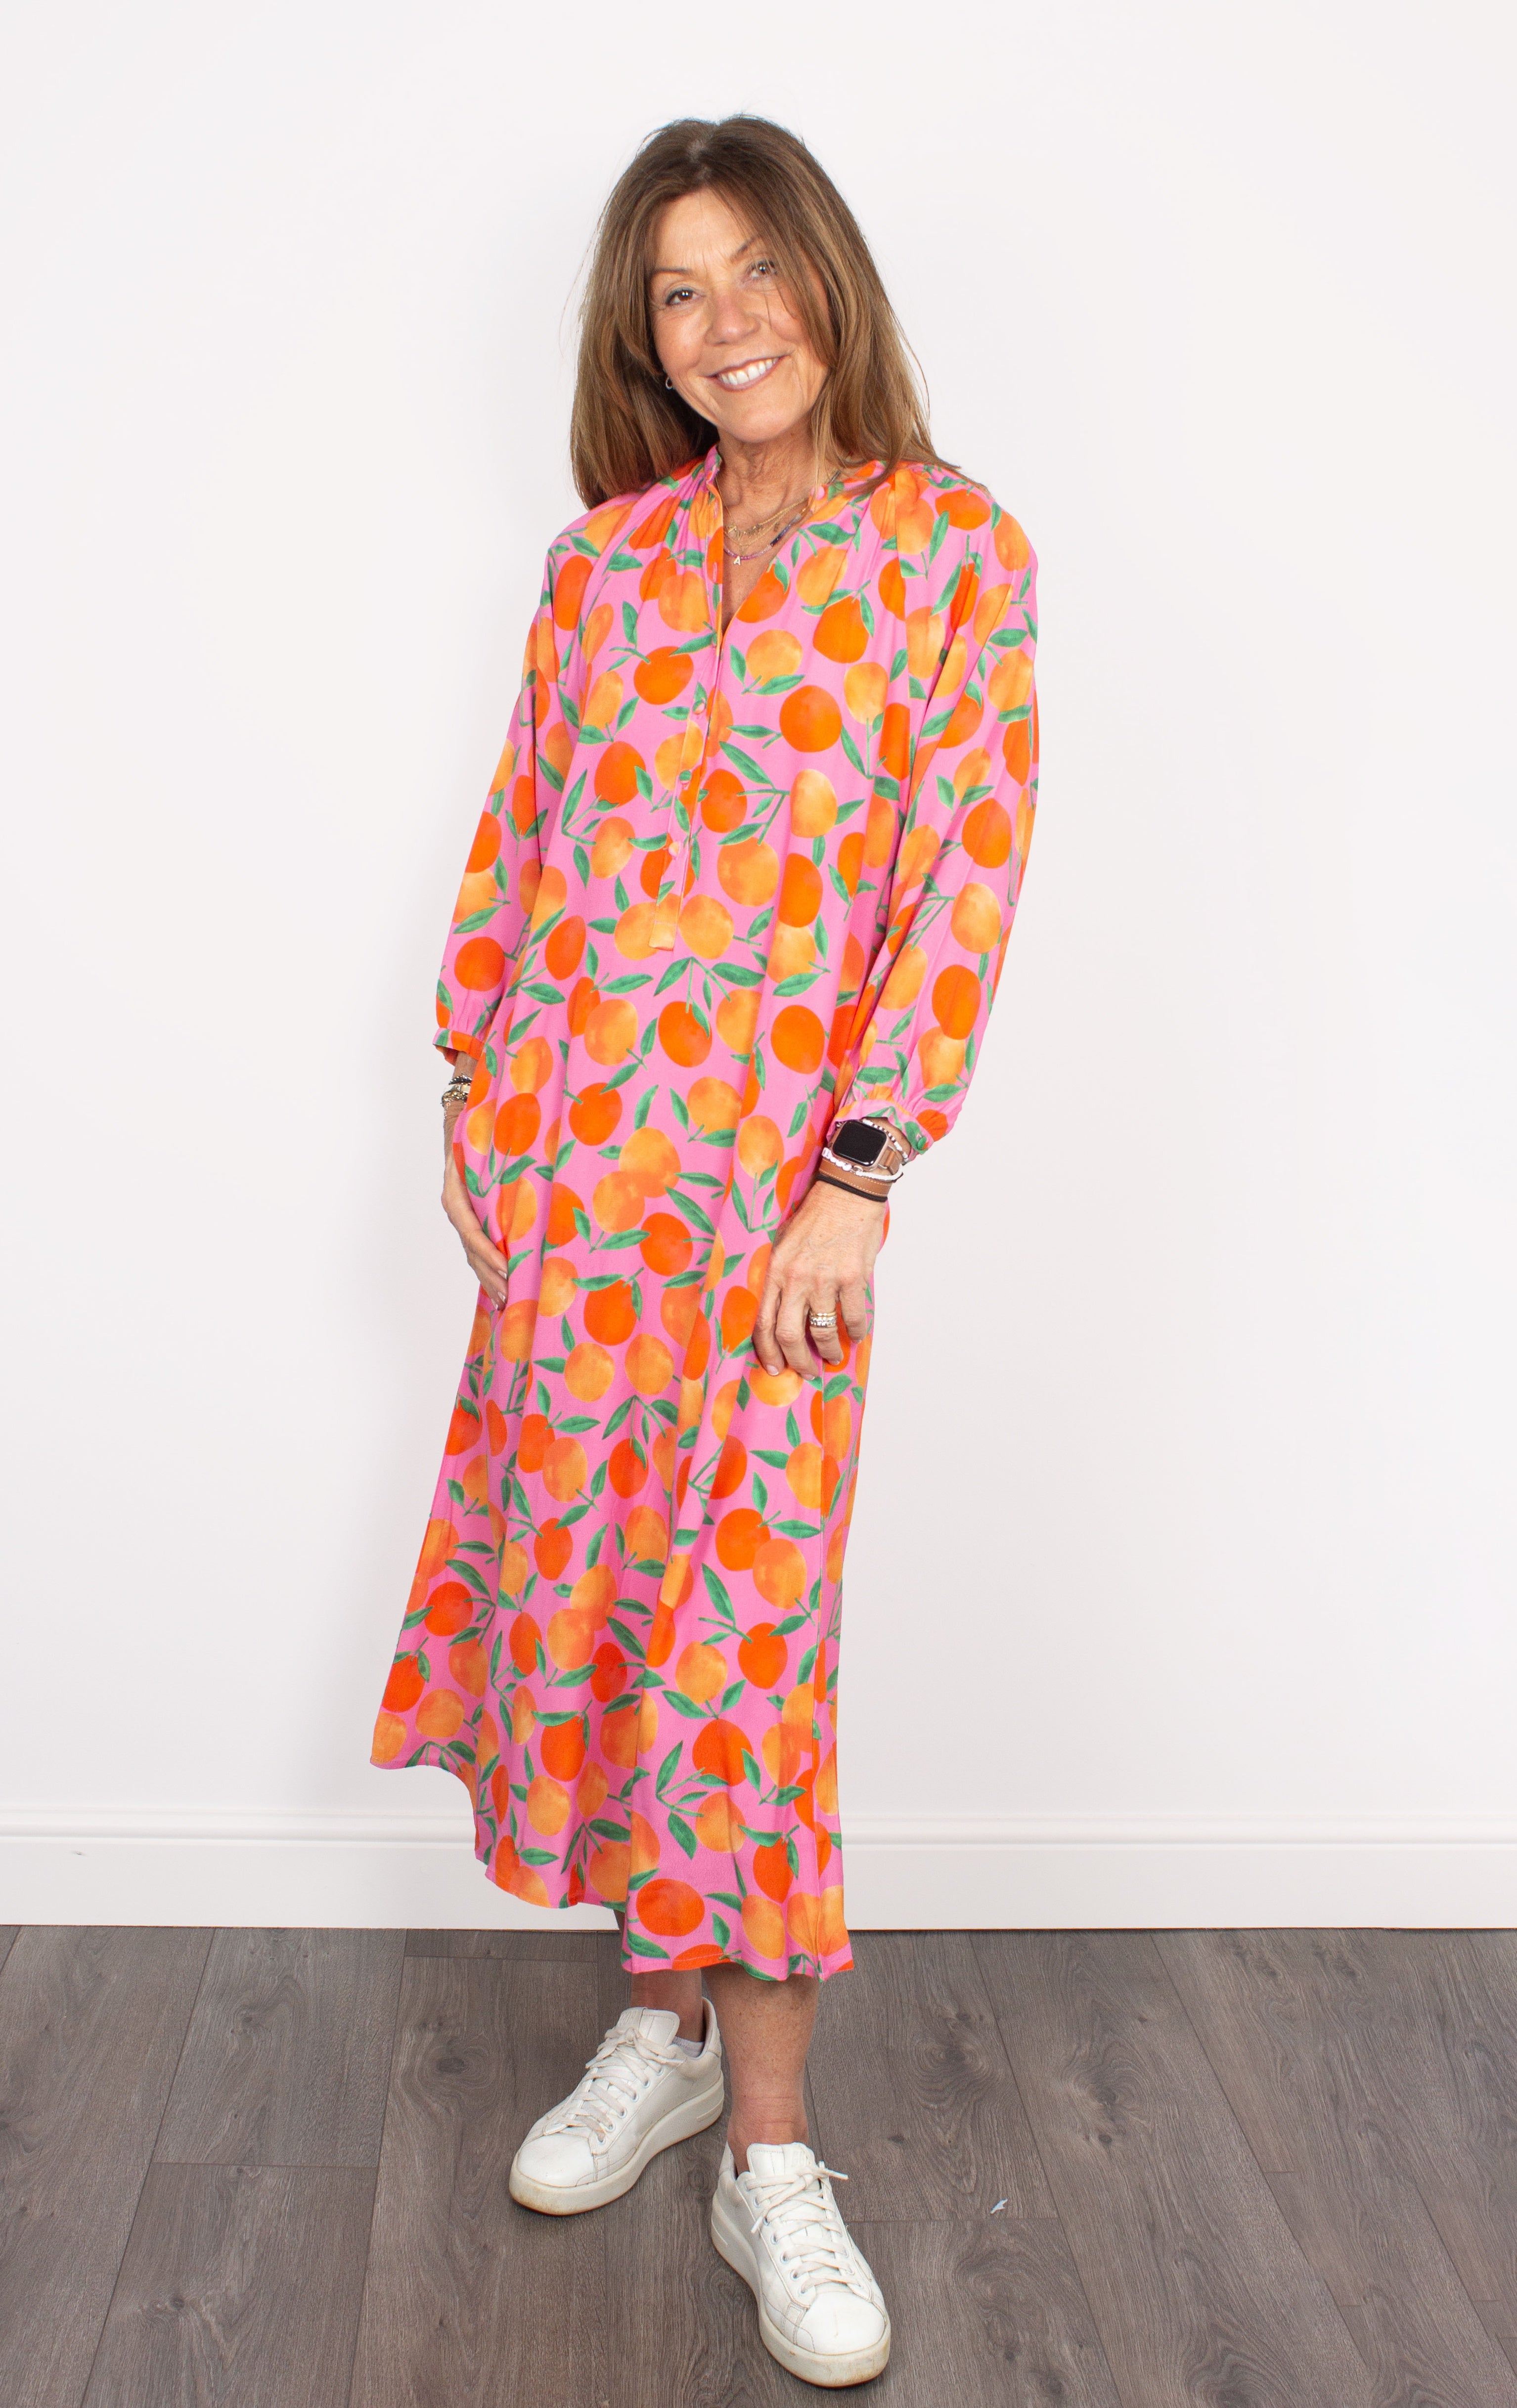 Primrose Park London Zion clementine-print dress